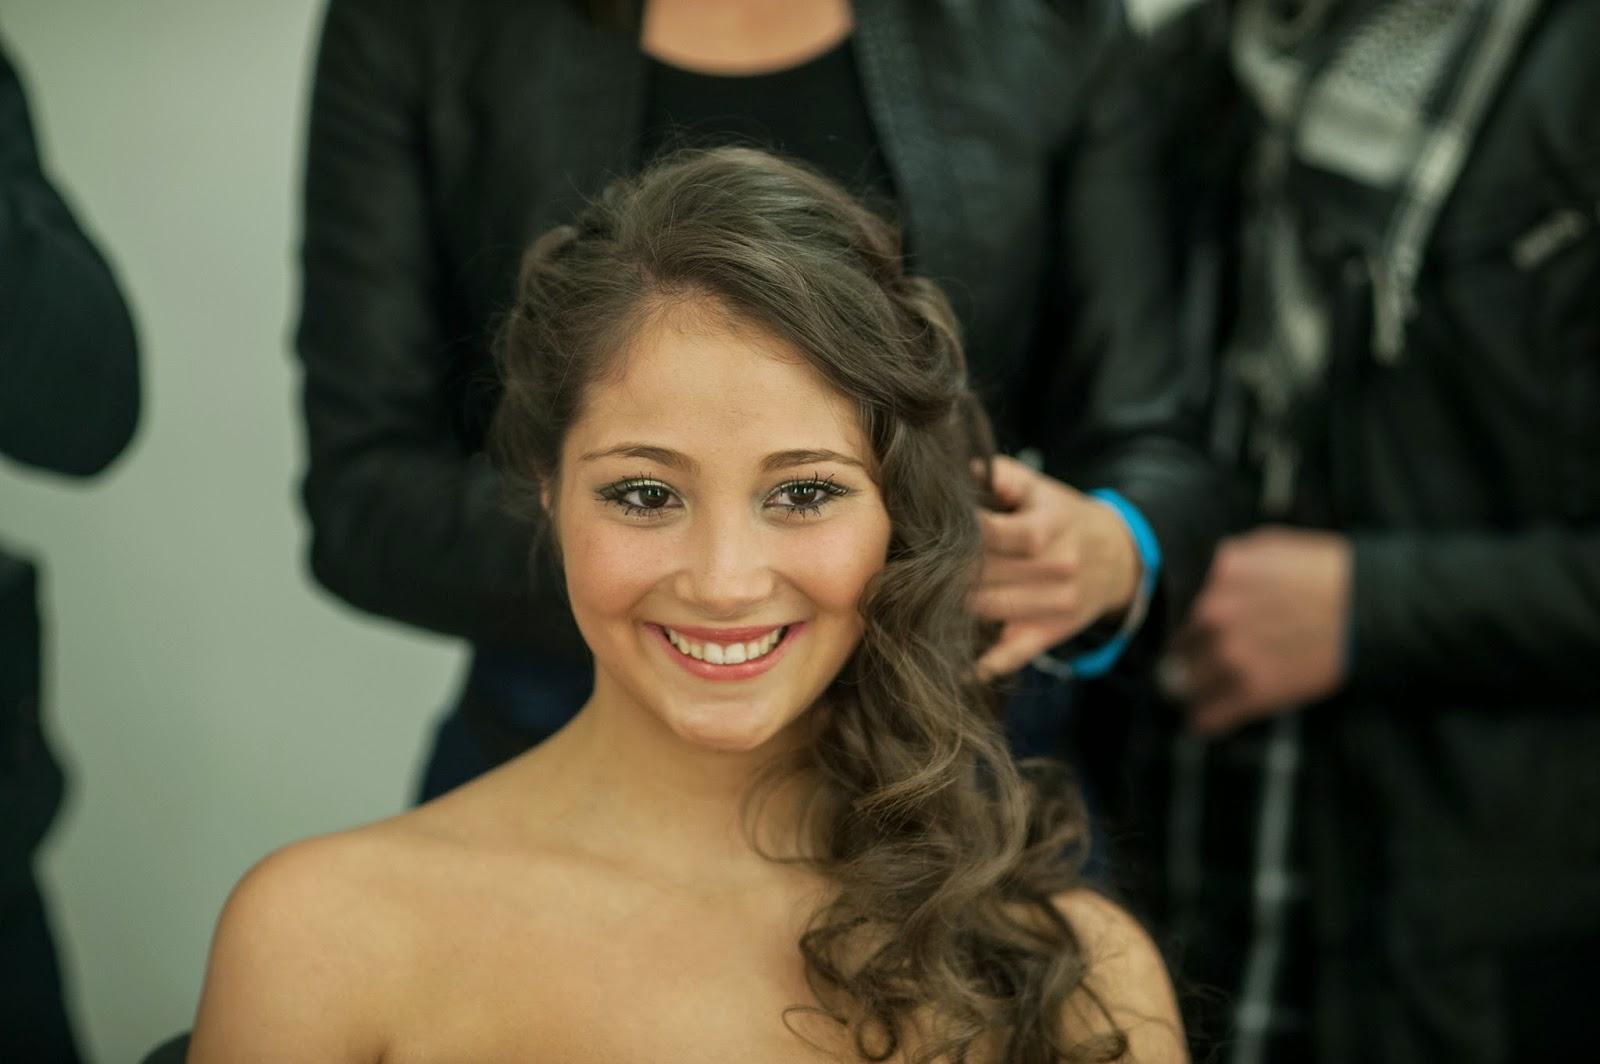 Jessica Duarte est Miss Portugal Luxembourg 2015